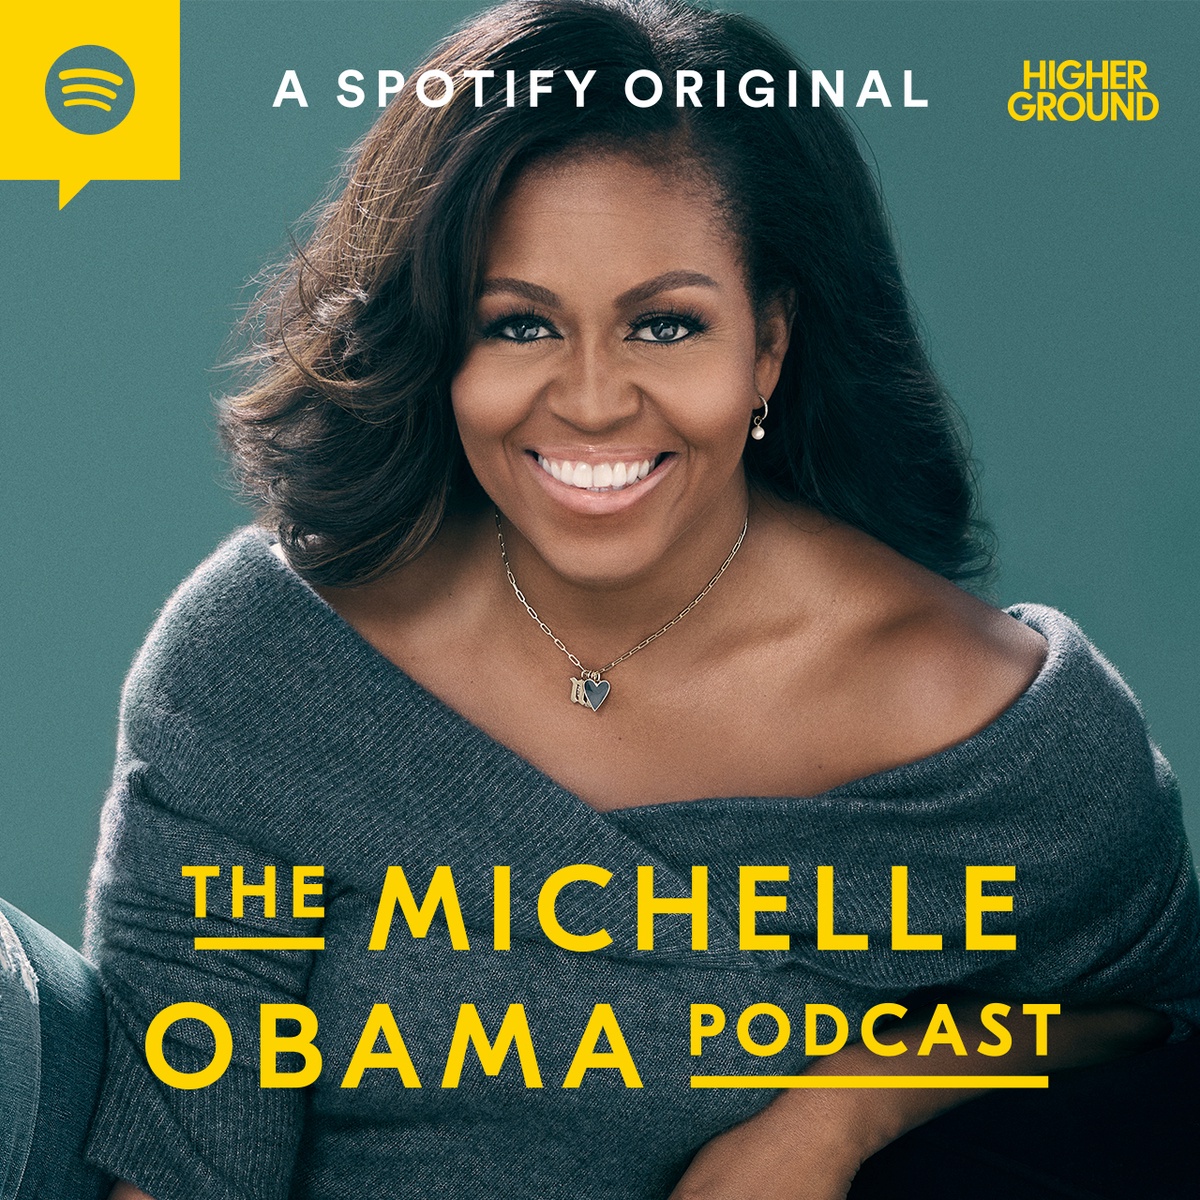 Higher Ground และ SPOTIFY เปิดตัวรายการ The Michelle Obama Podcast